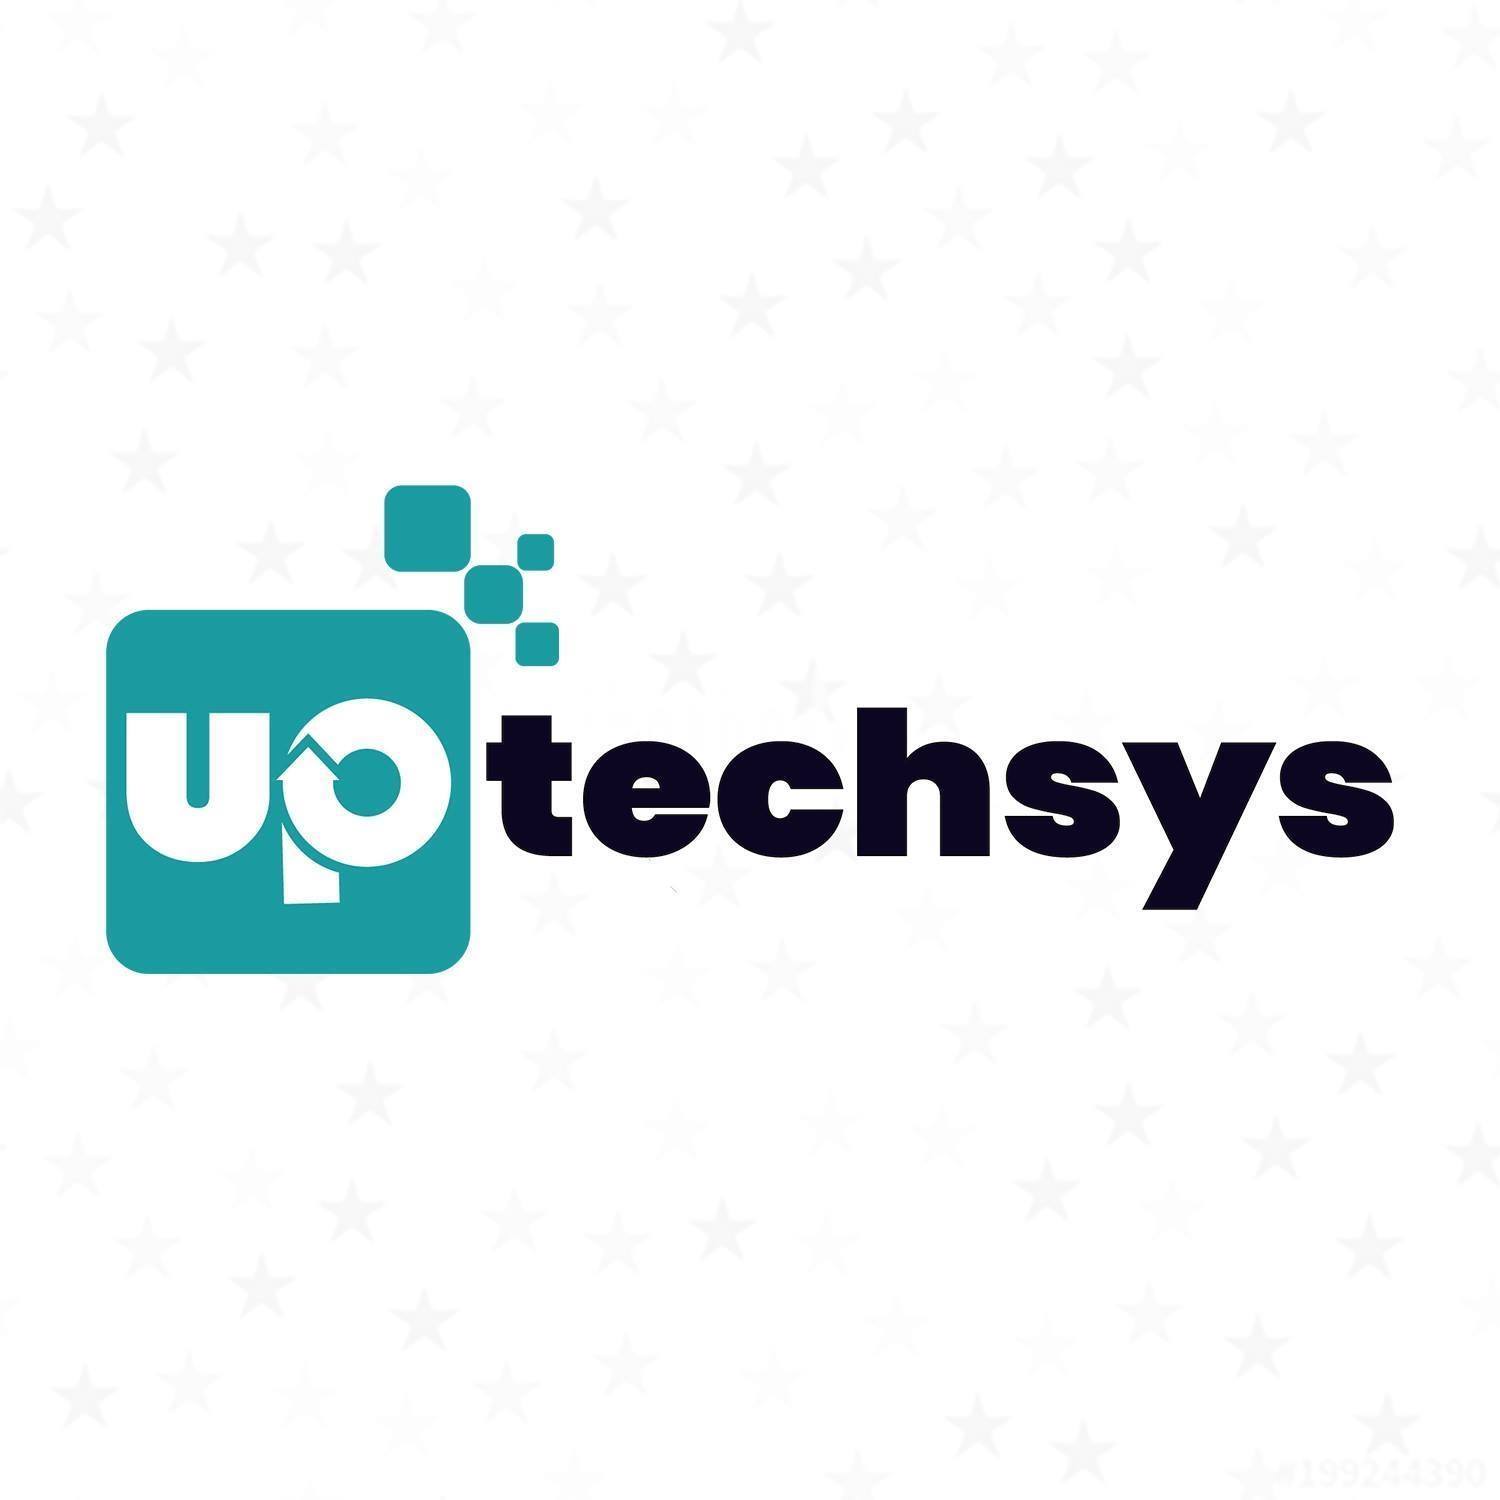 UpTechSys Pvt. Ltd